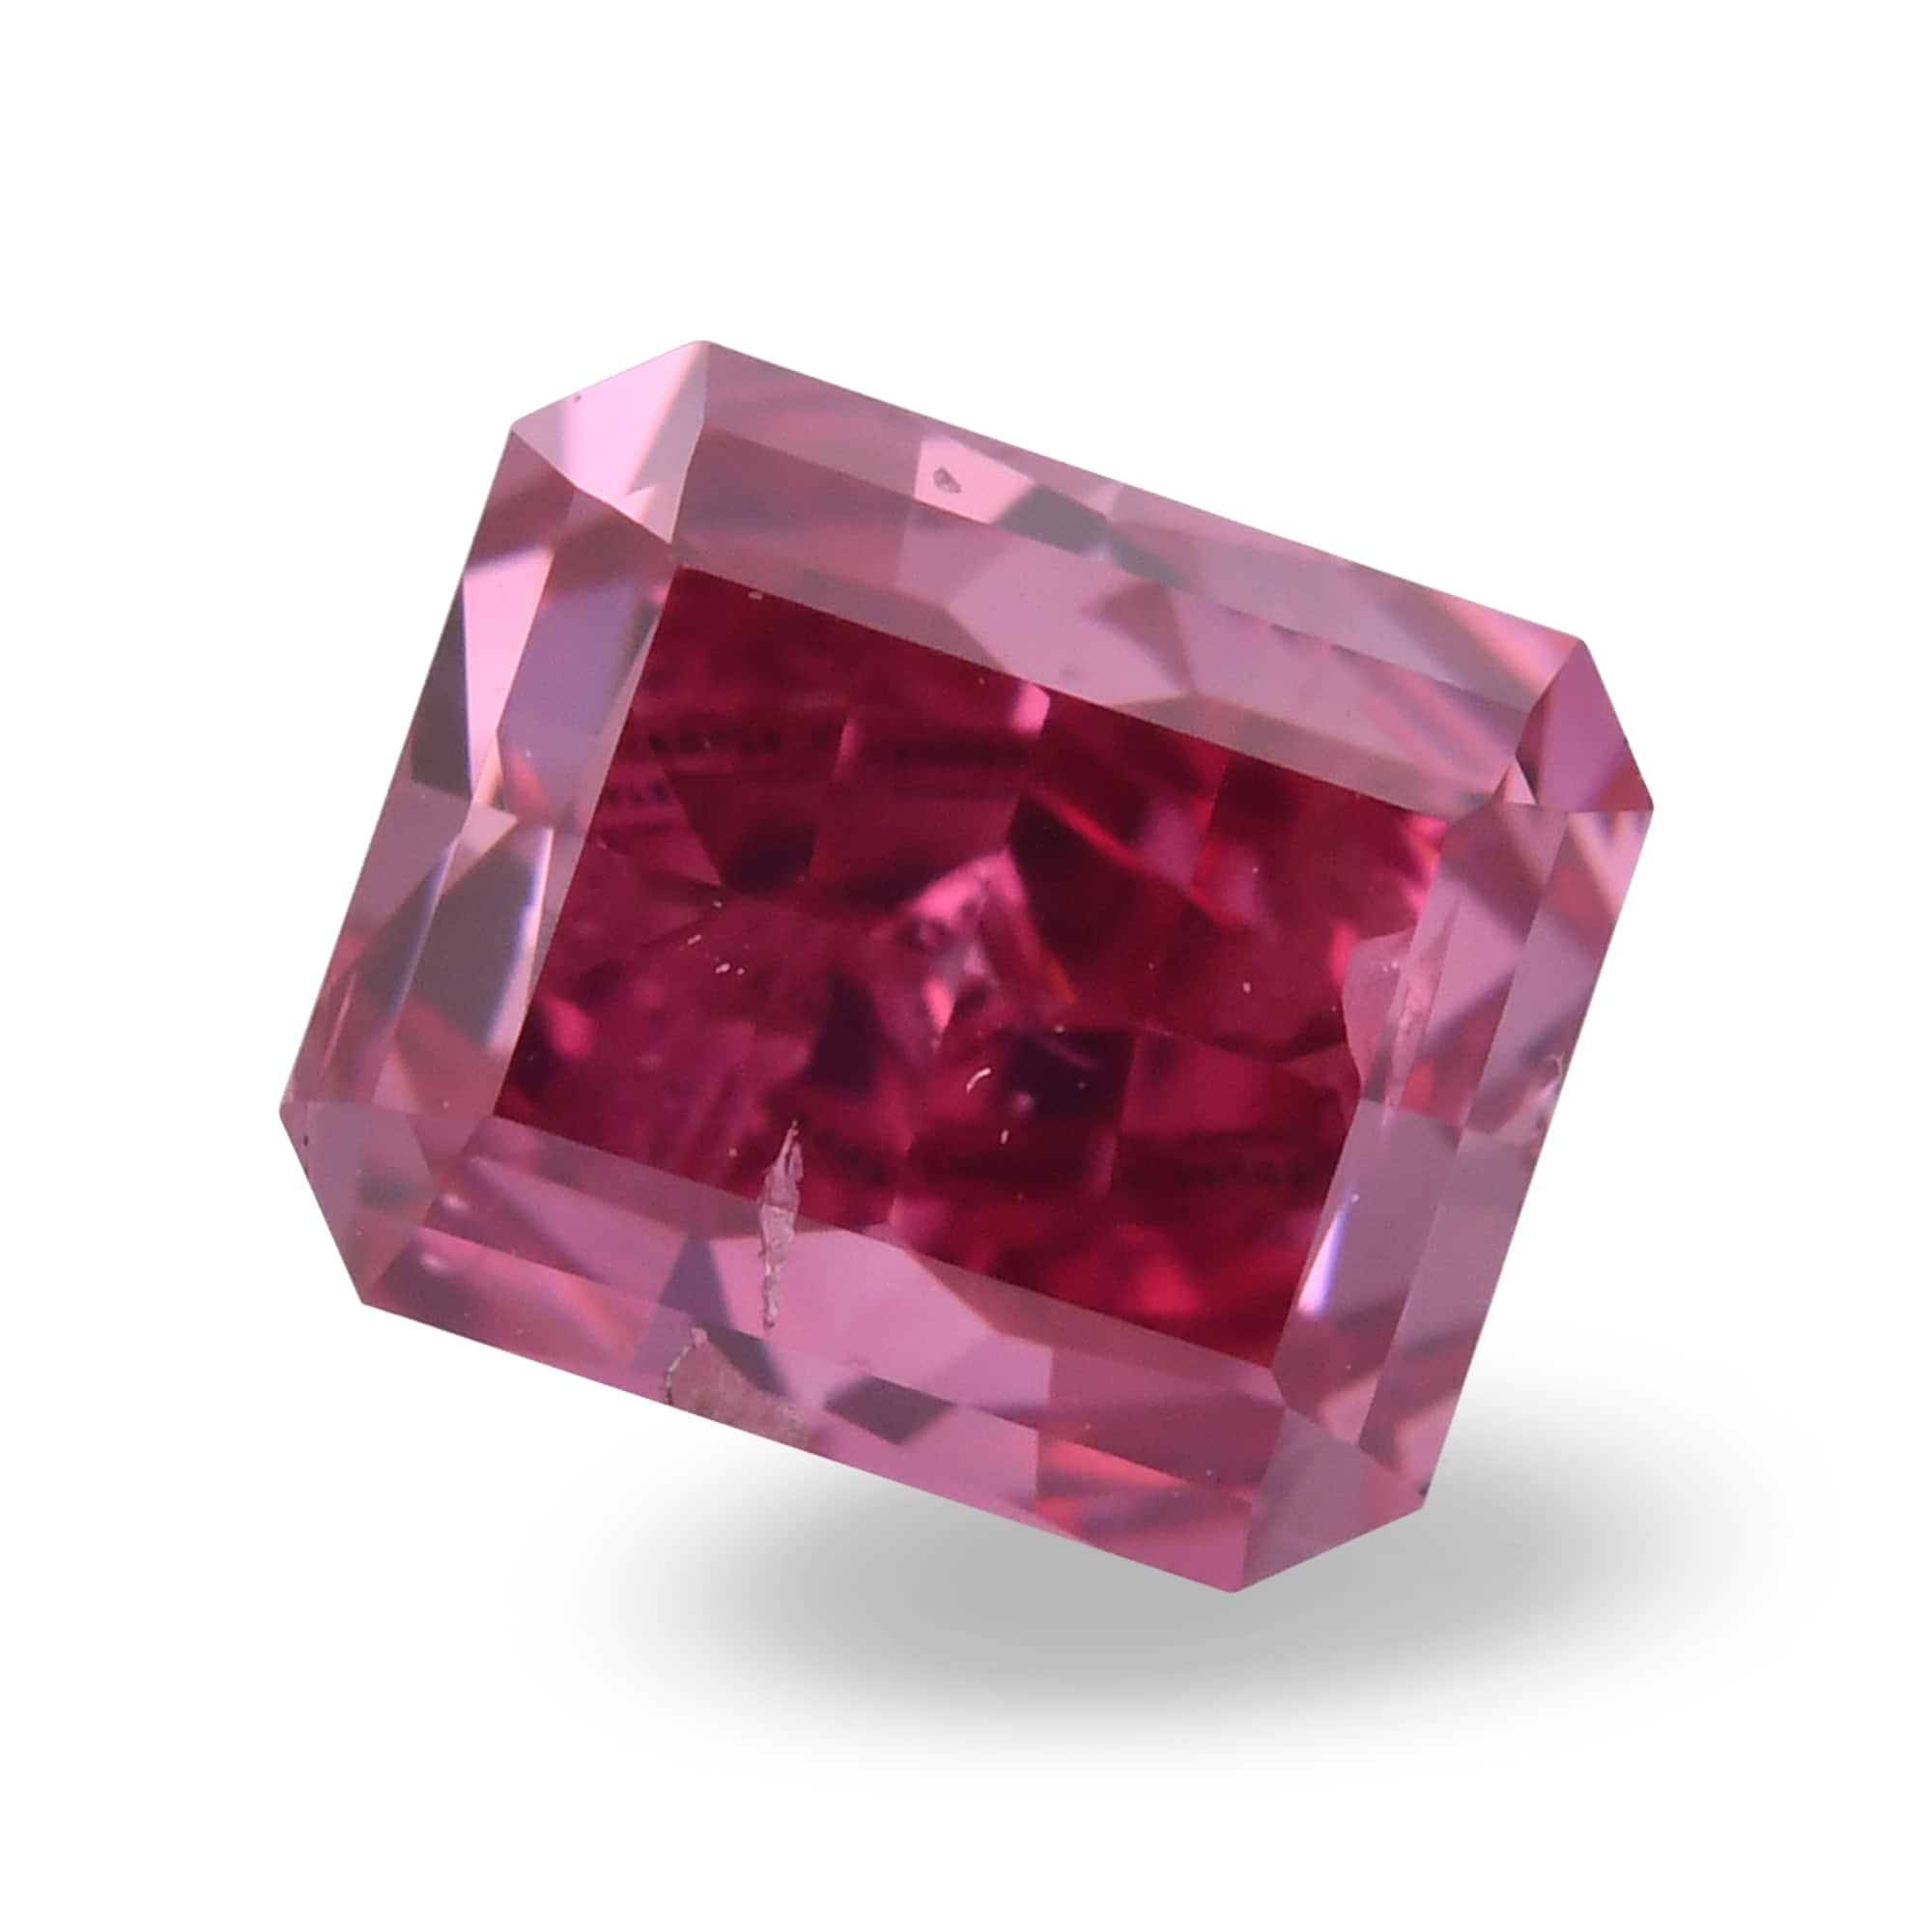 LEIBISH 0.47 carat, Fancy Purplish Red Diamond, pRED, Radiant Shape, I1 Clarity, GIA & ARGYLE